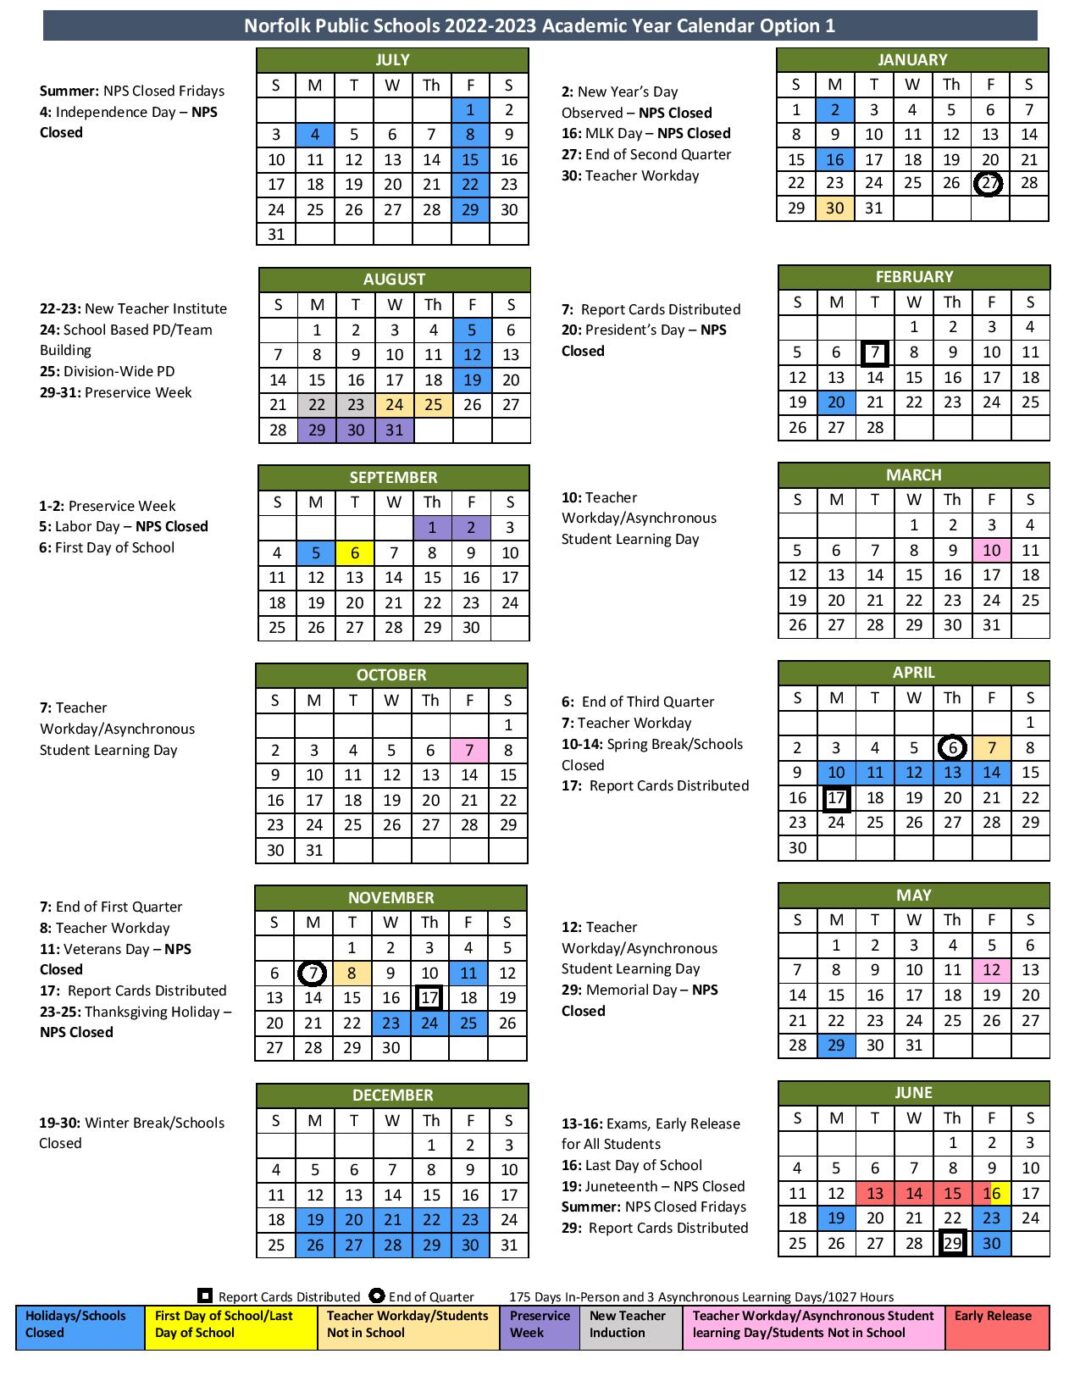 Norfolk Public Schools Calendar 2022 2023 In PDF